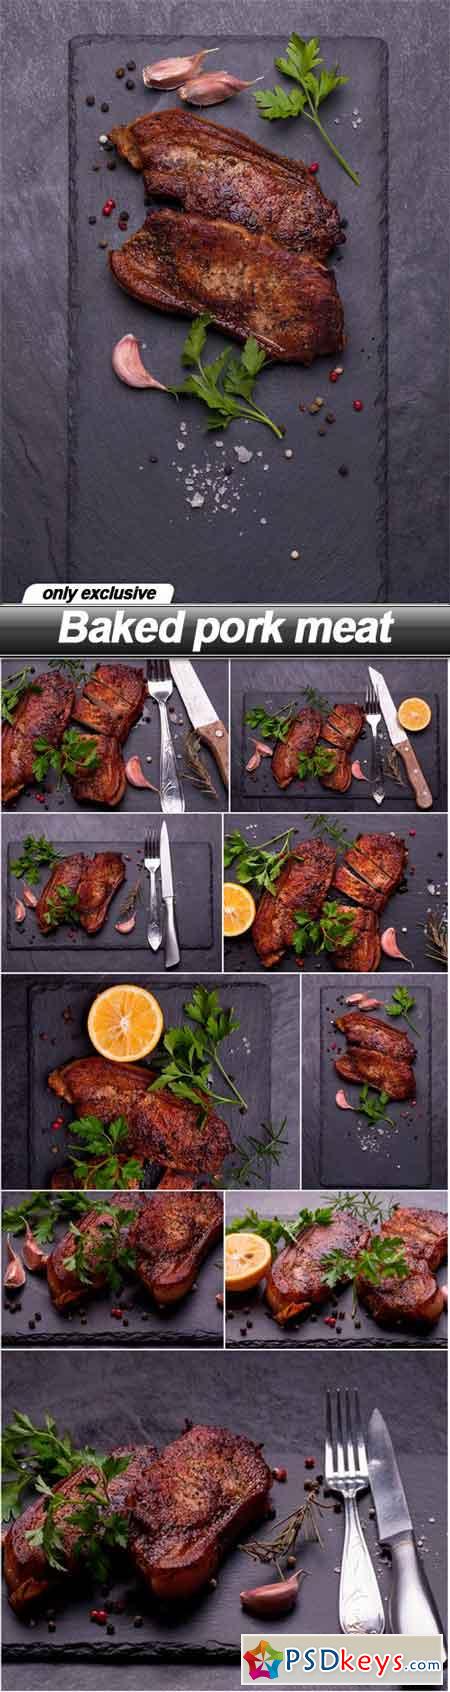 Baked pork meat - 9 UHQ JPEG